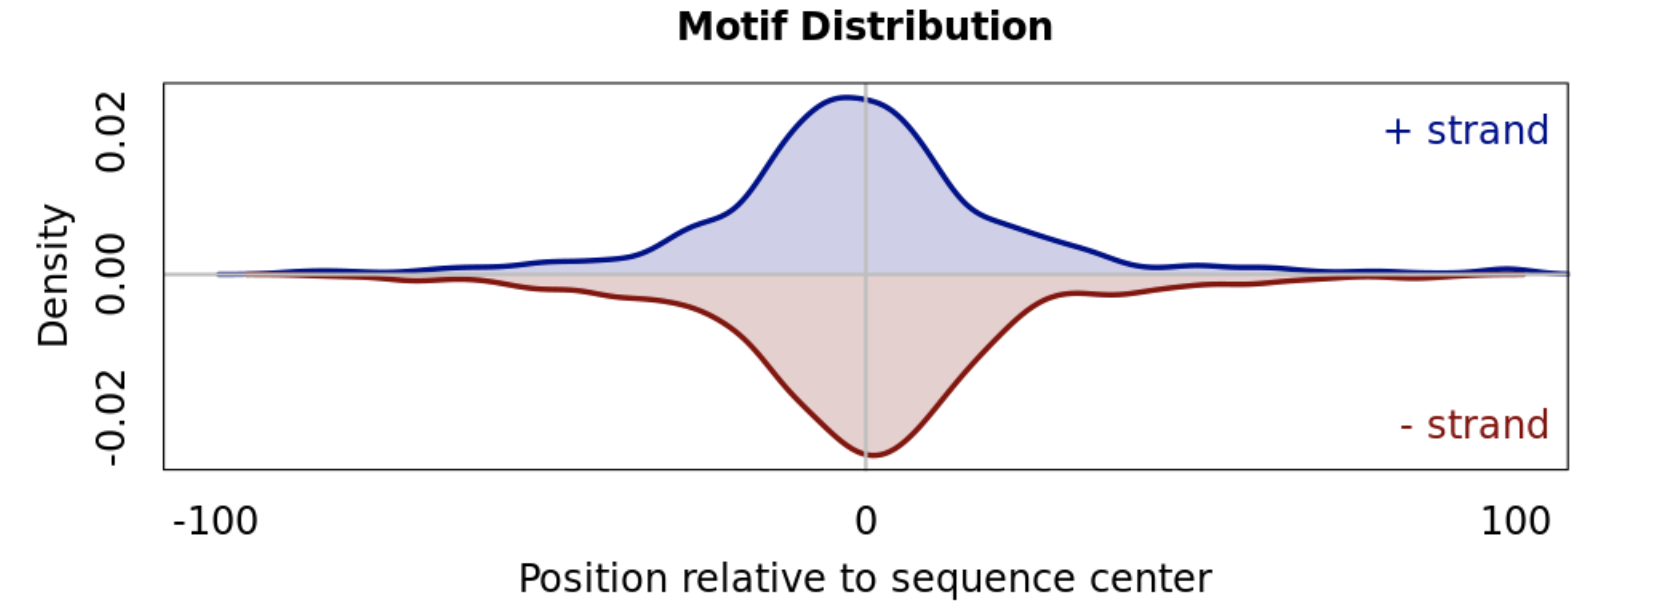 _images/motif_distribution_peaked.png